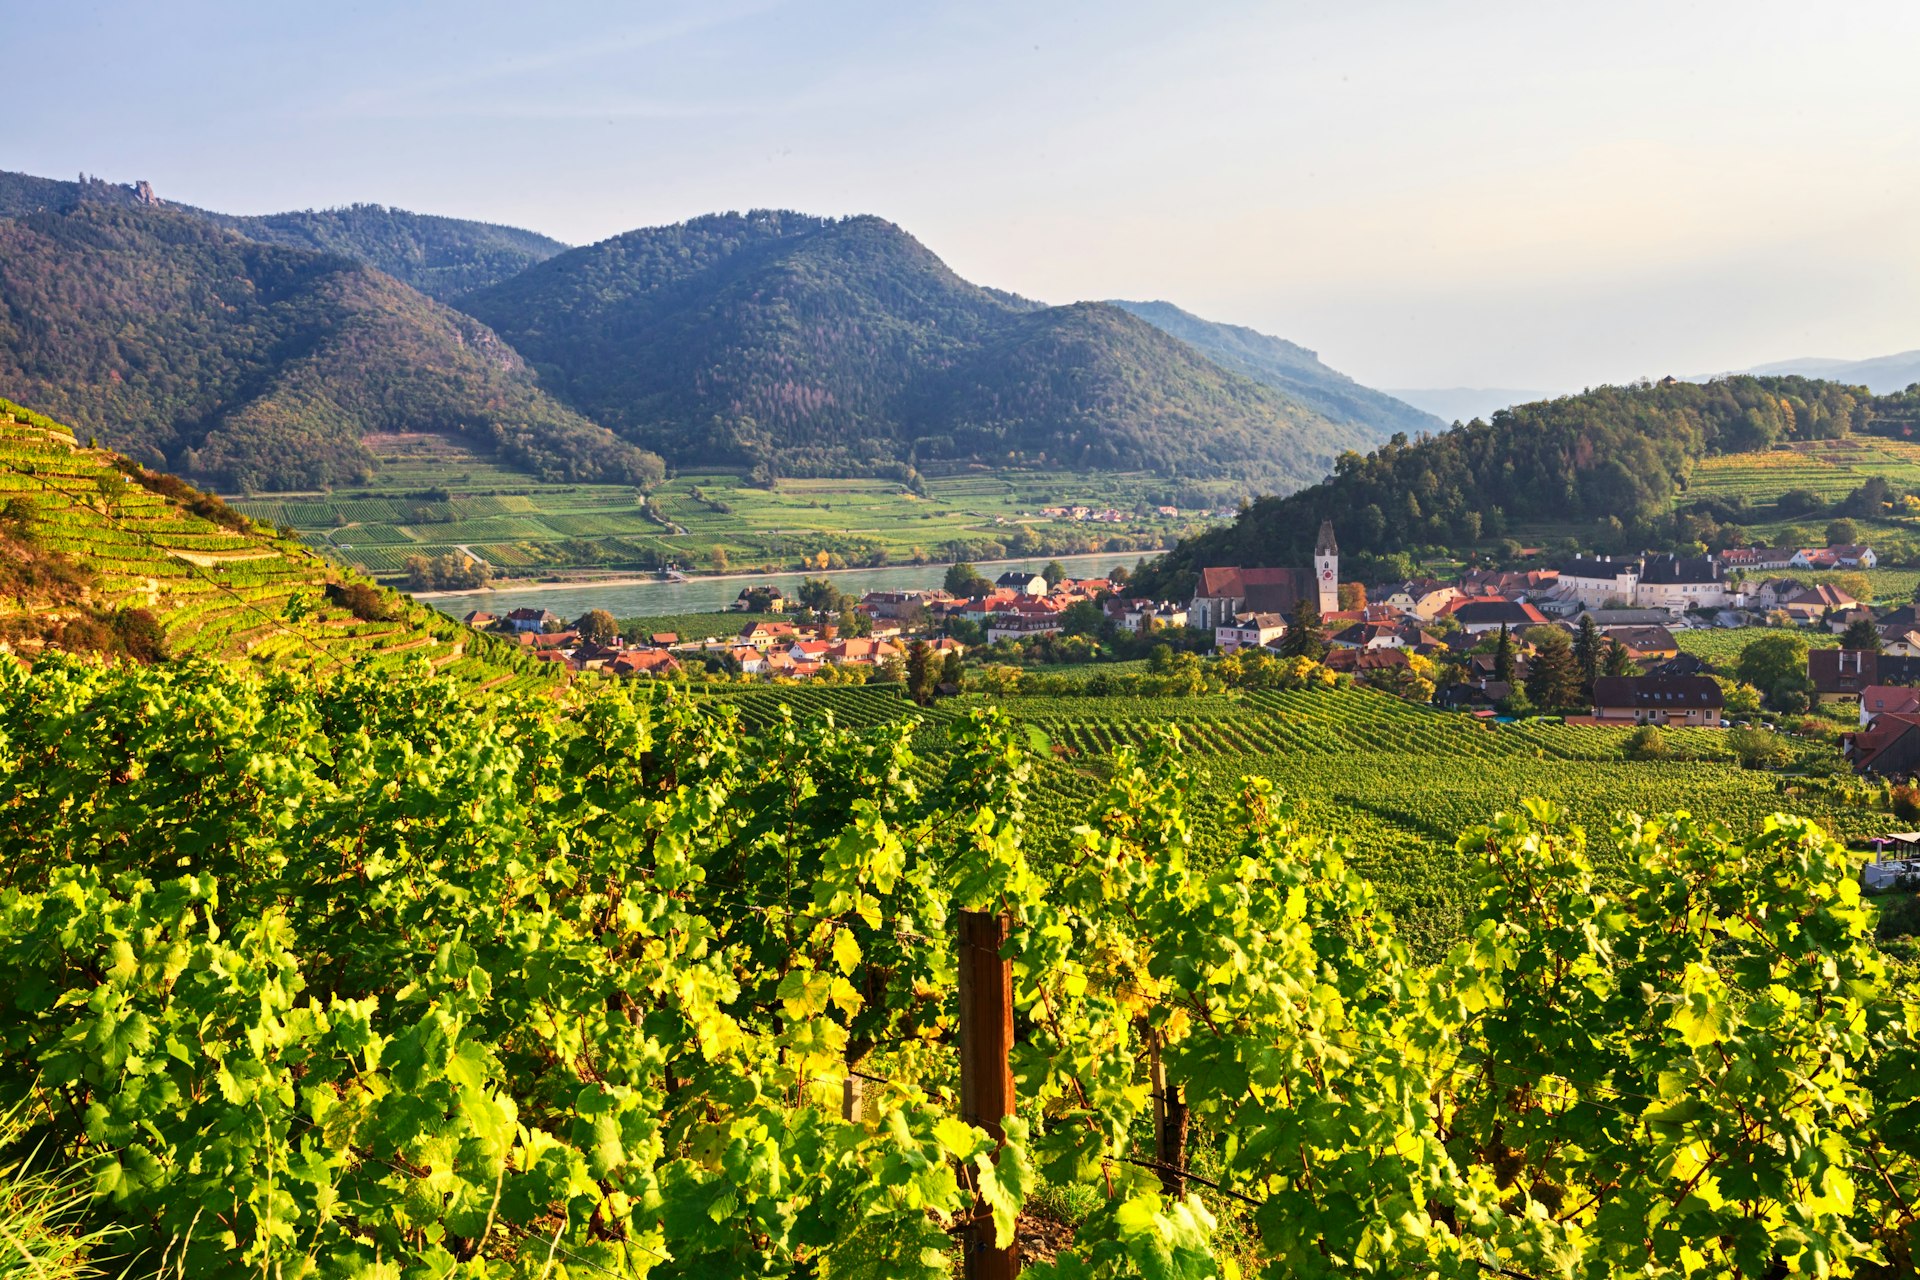 A green valley full of vineyards near Spitz, Austria